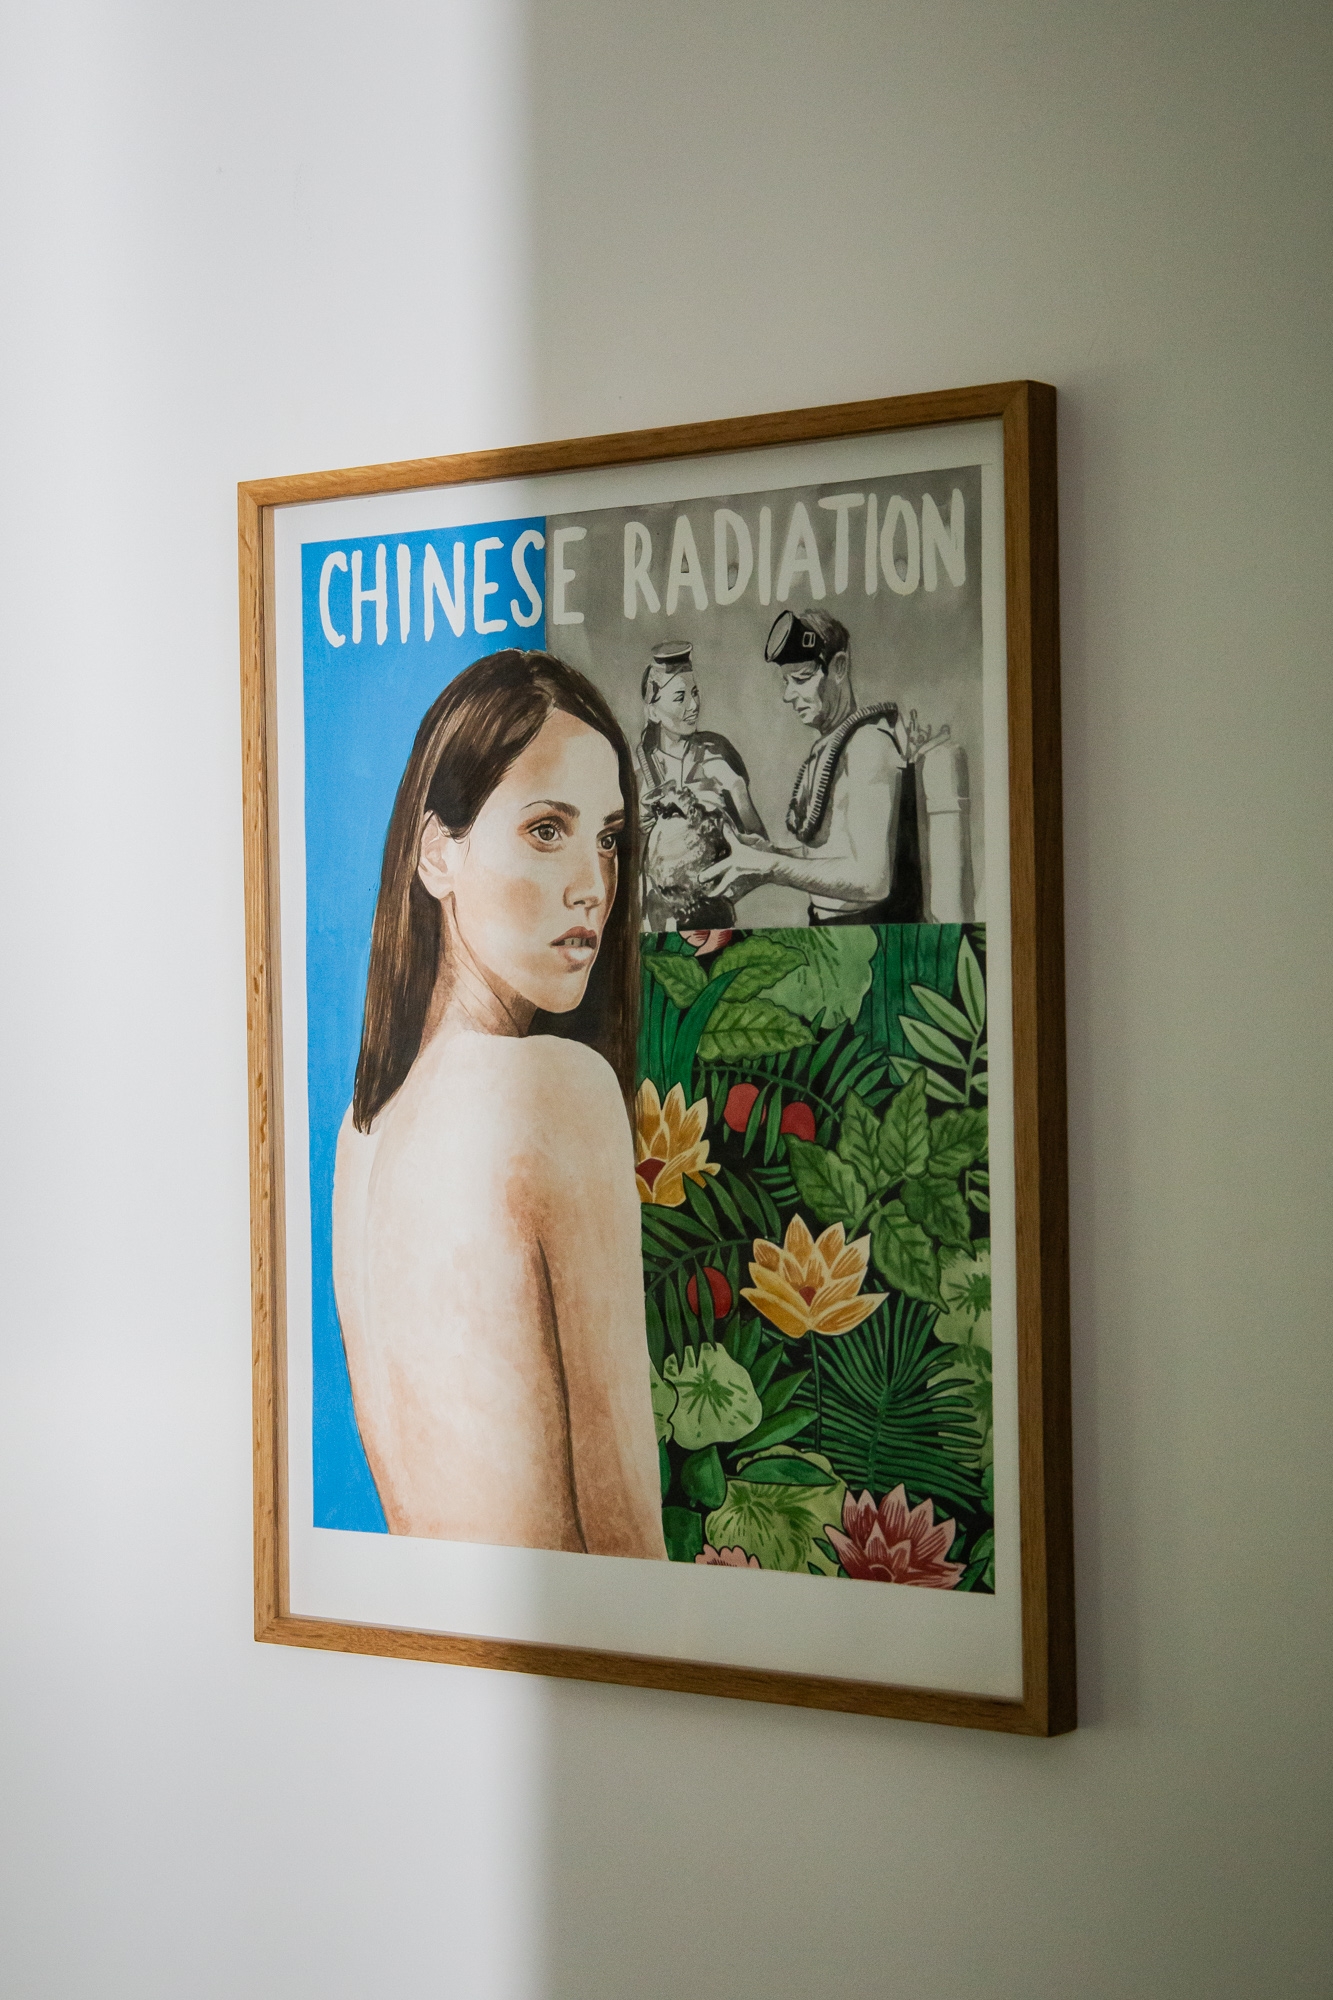 Chinese radiation